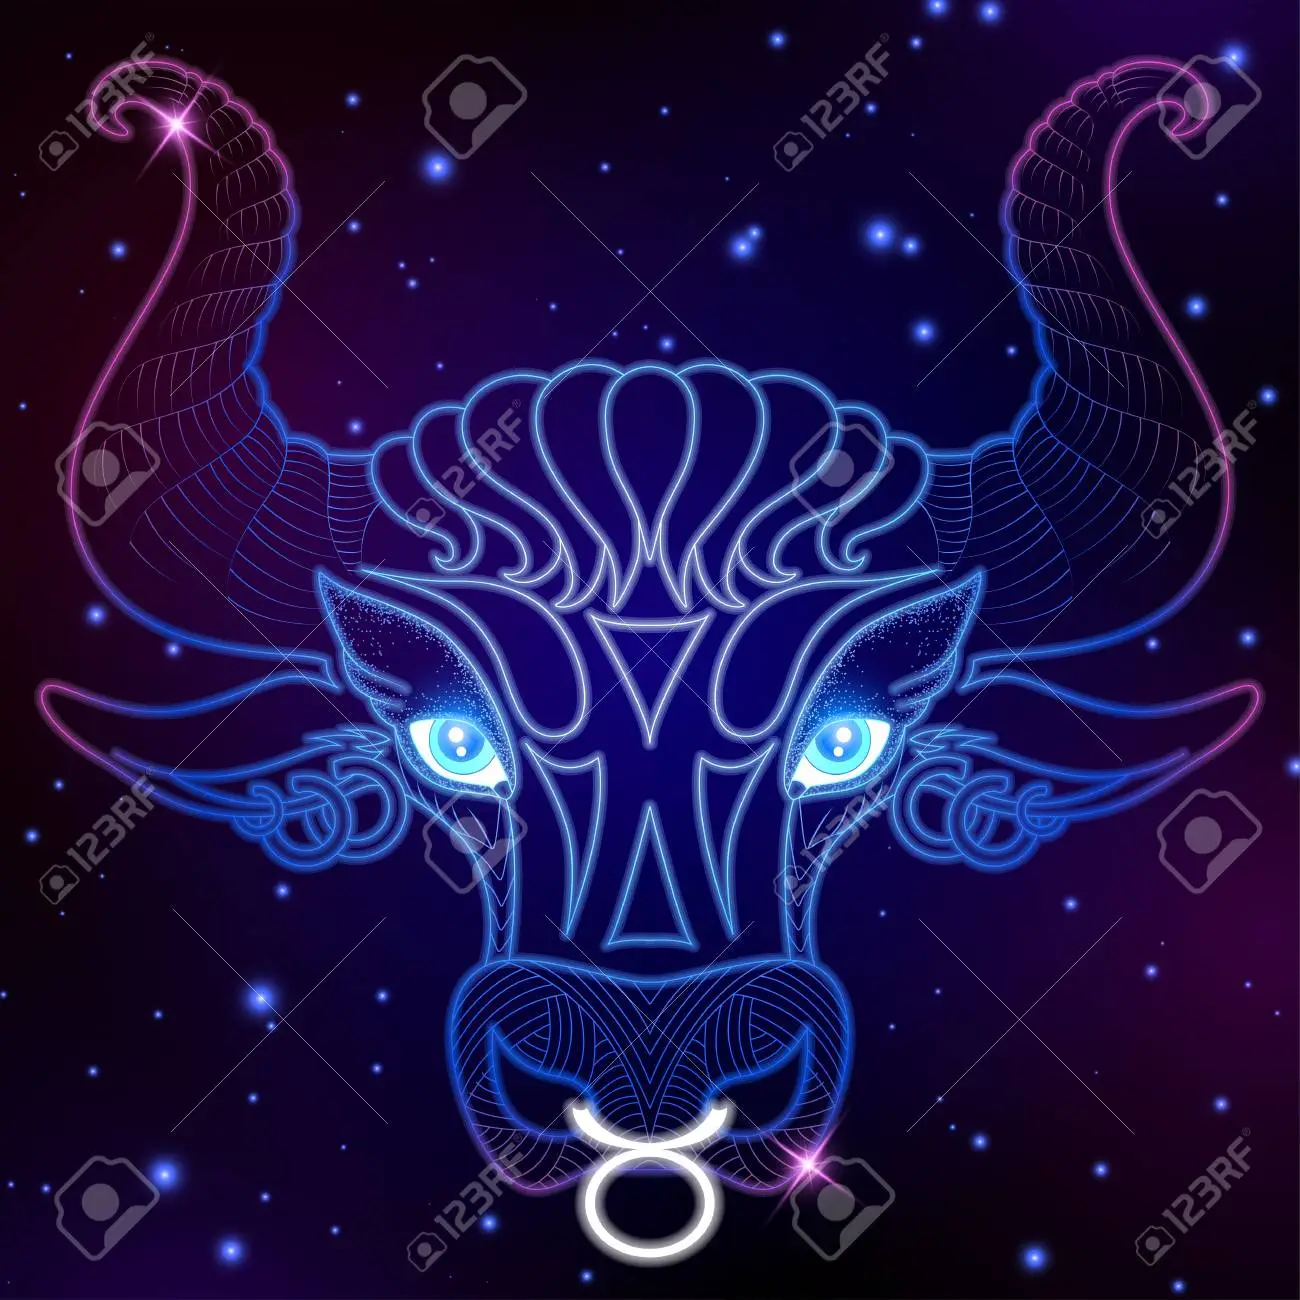 Illustration of the Taurus zodiac sign